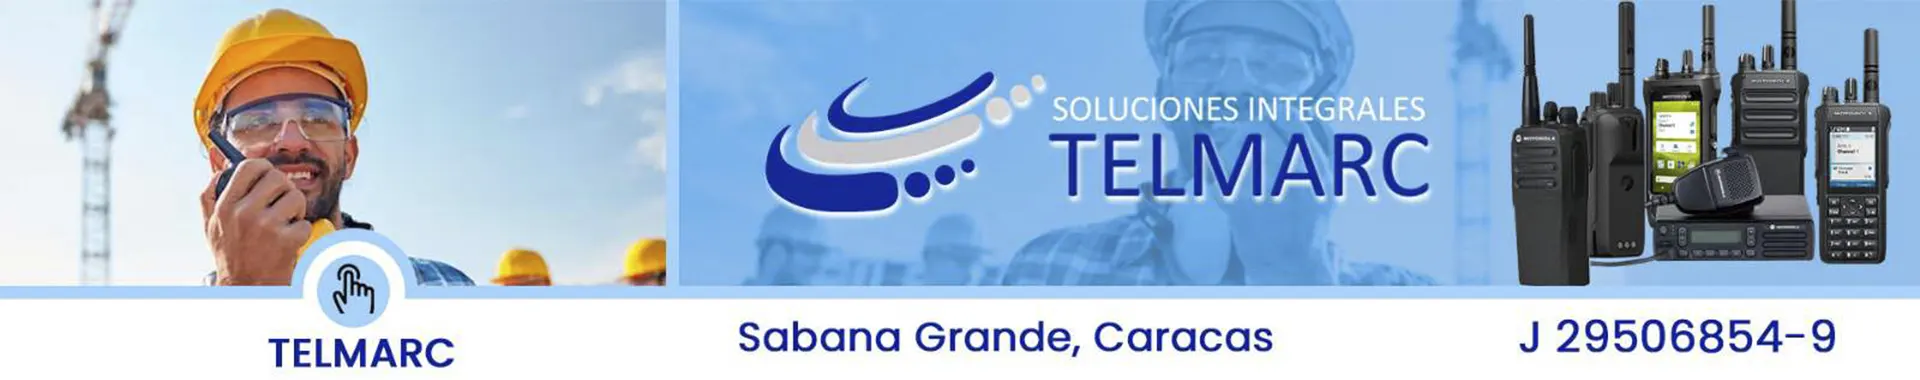 Imagen 1 del perfil de Telmarc